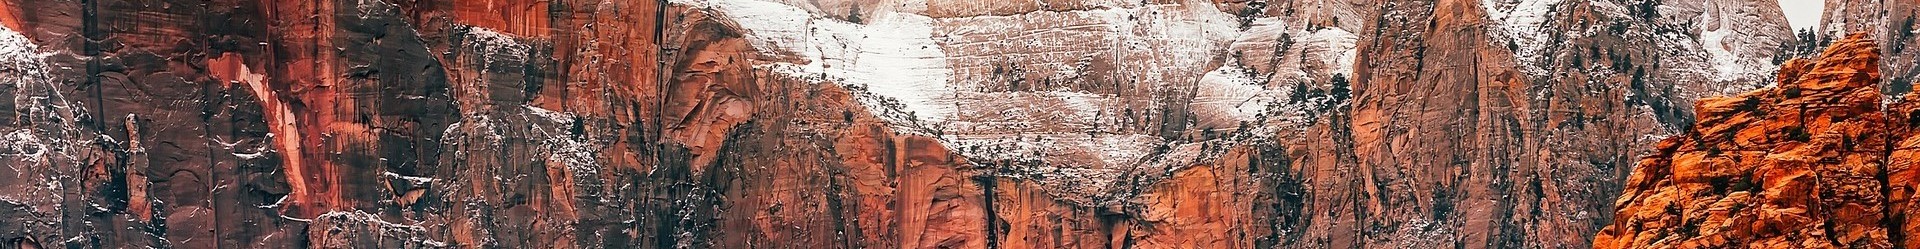 grand canyon landscape image